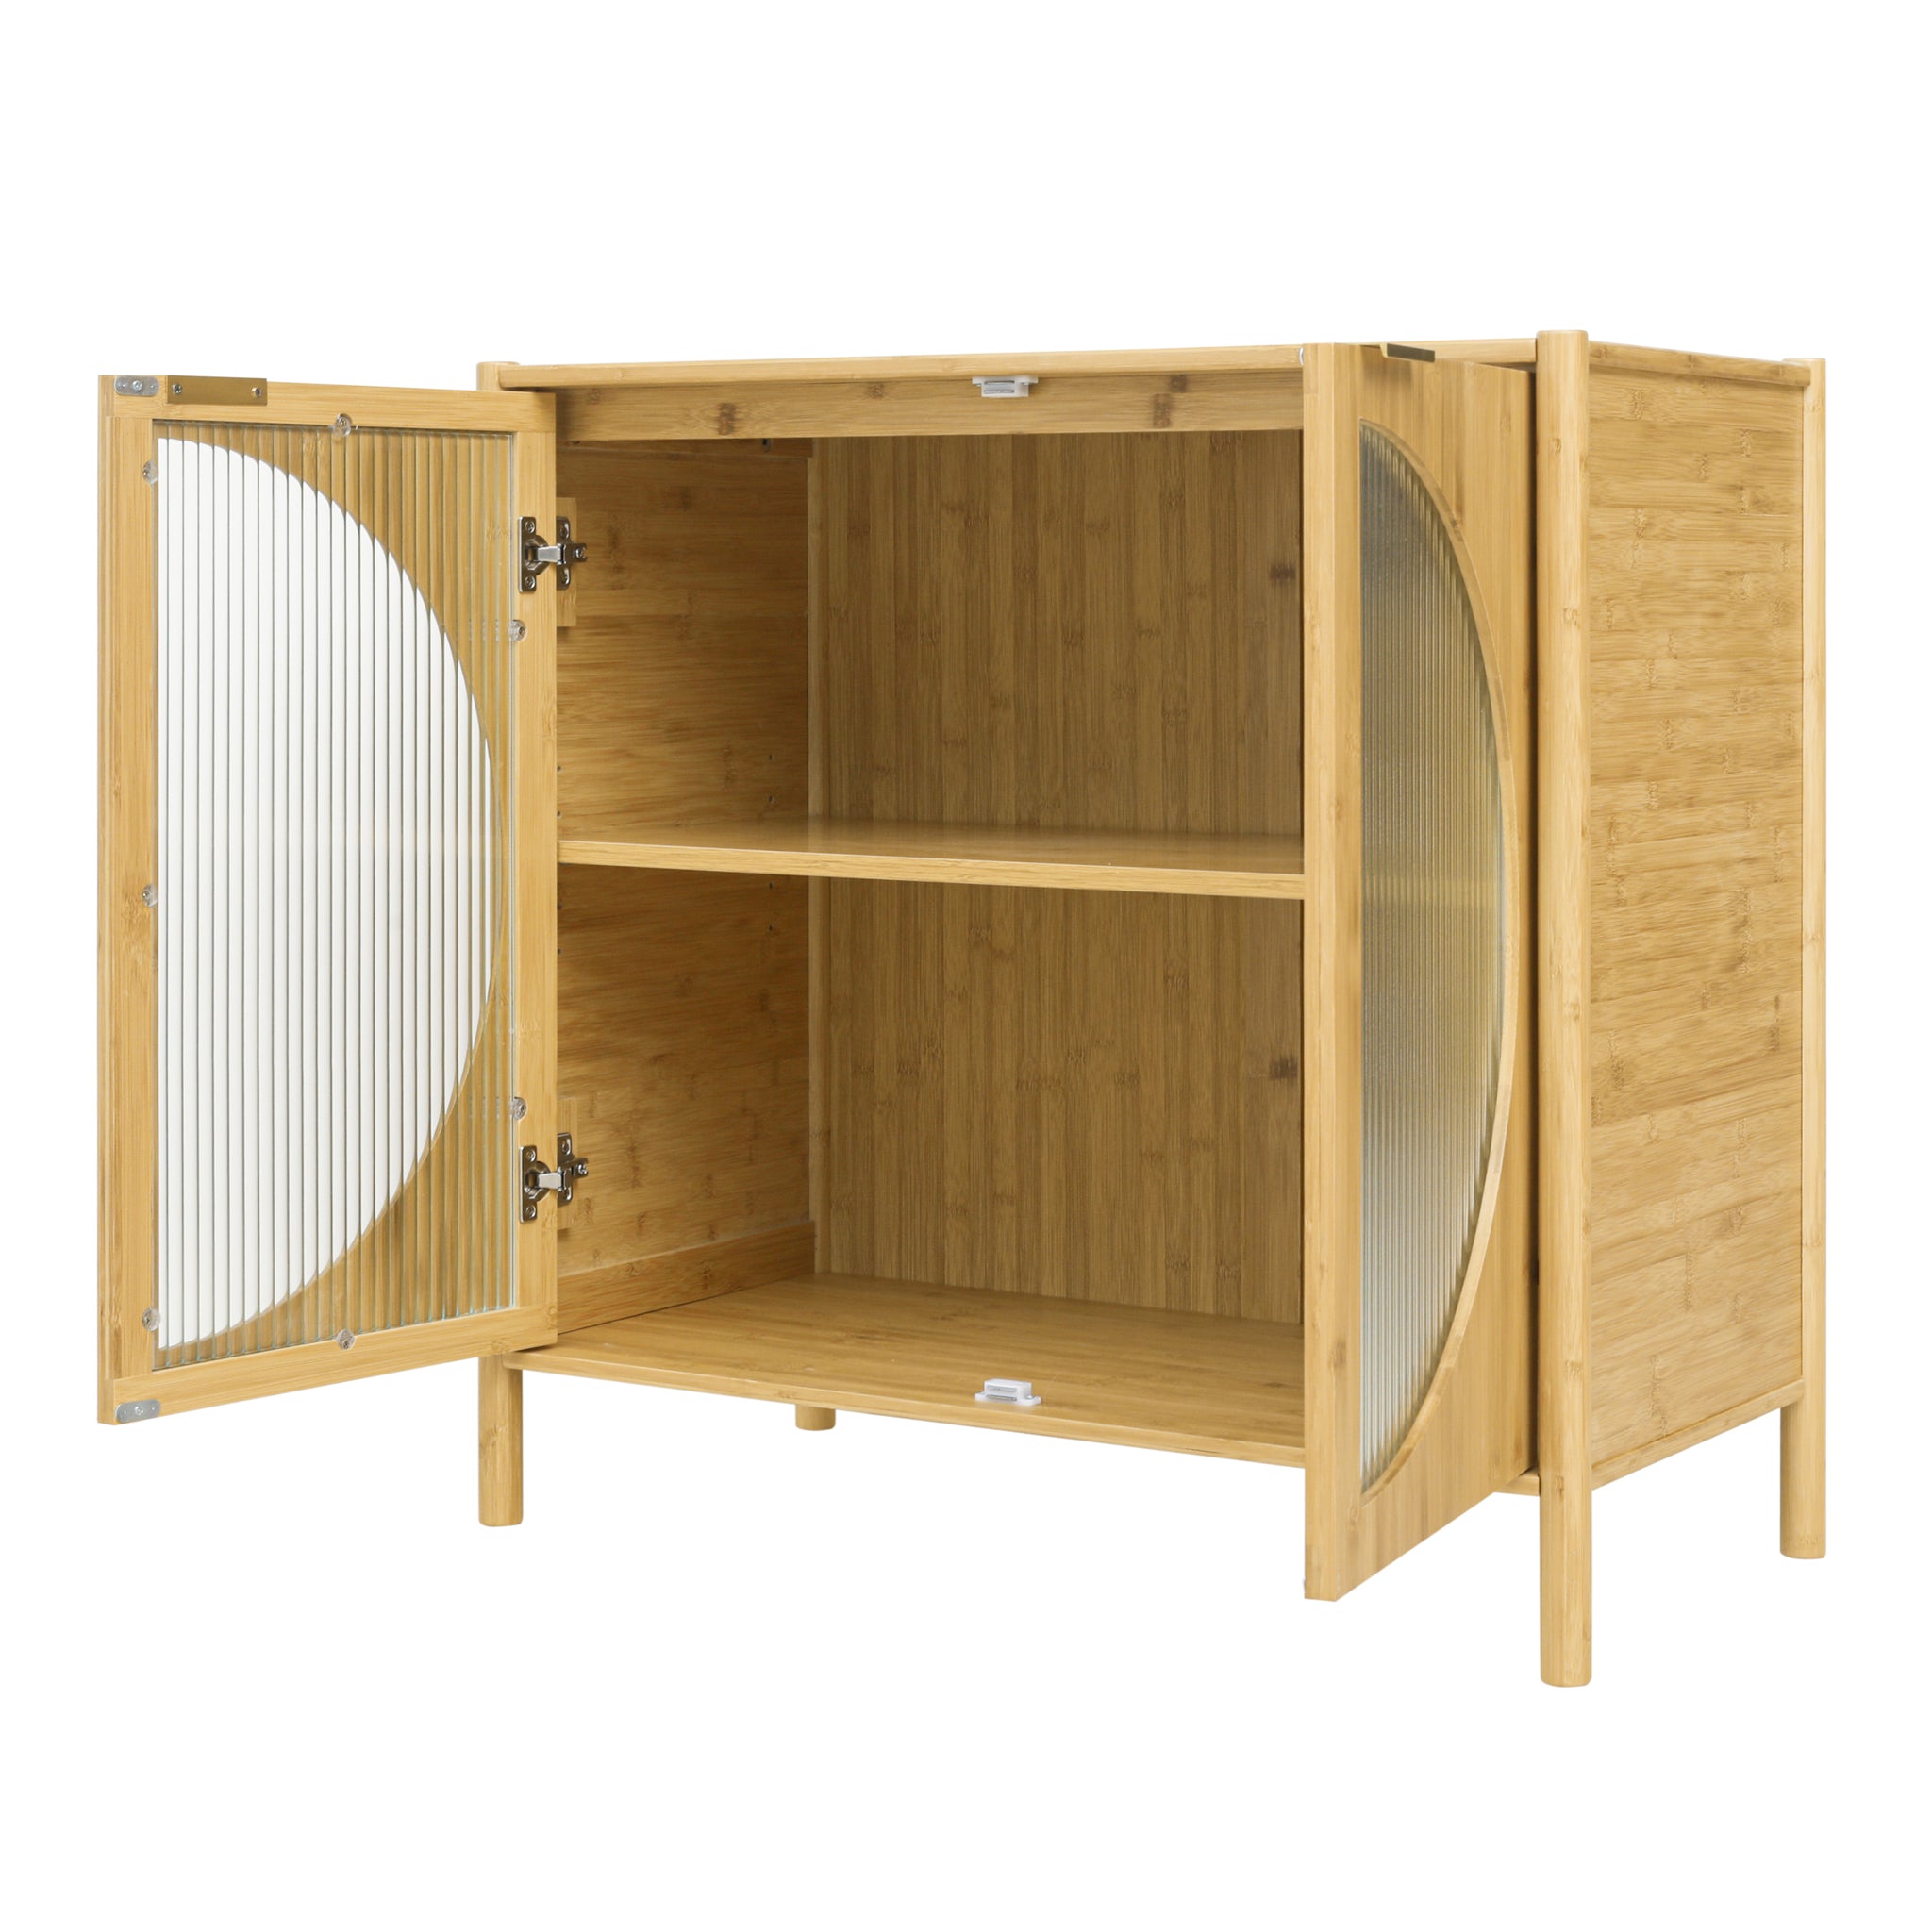 Bamboo 2 door cabinet, Set of 2, Buffet Sideboard natural-bamboo